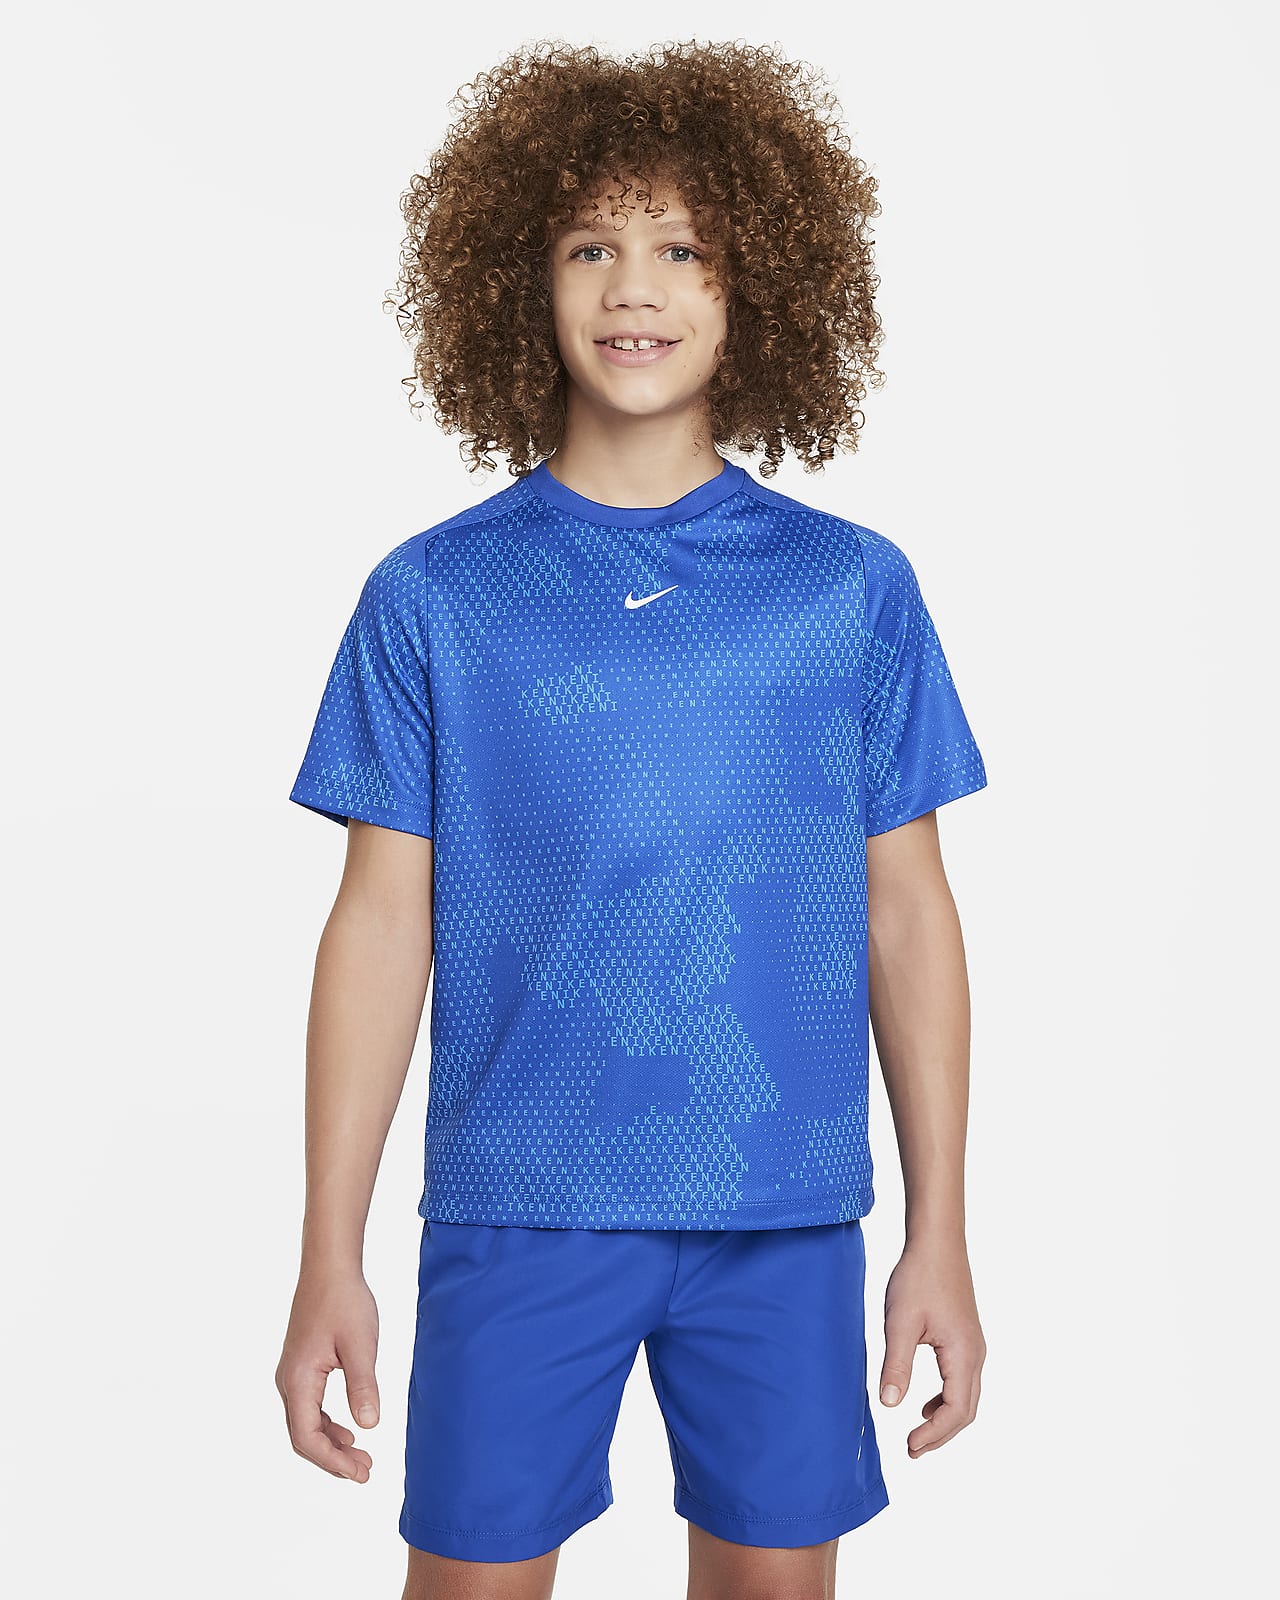 Nike Multi Big Kids' (Boys') Dri-FIT Short-Sleeve Top